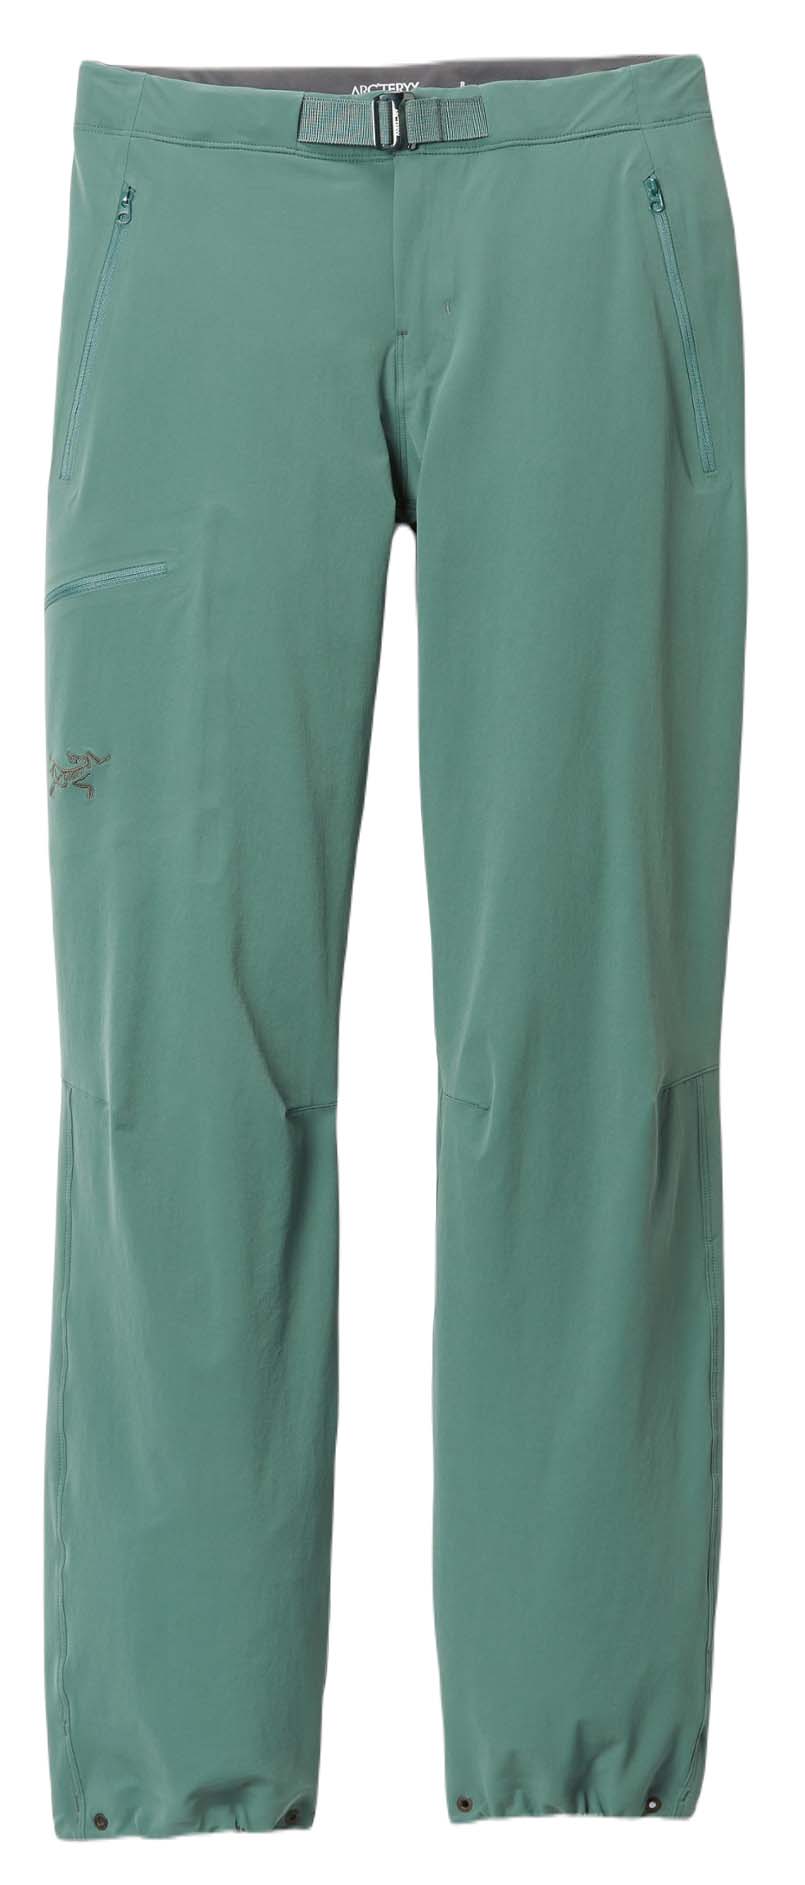 Kuhl Pants Women’s Size 8 Regular Splash Roll Up Convertible Hiking Outdoor  Tan